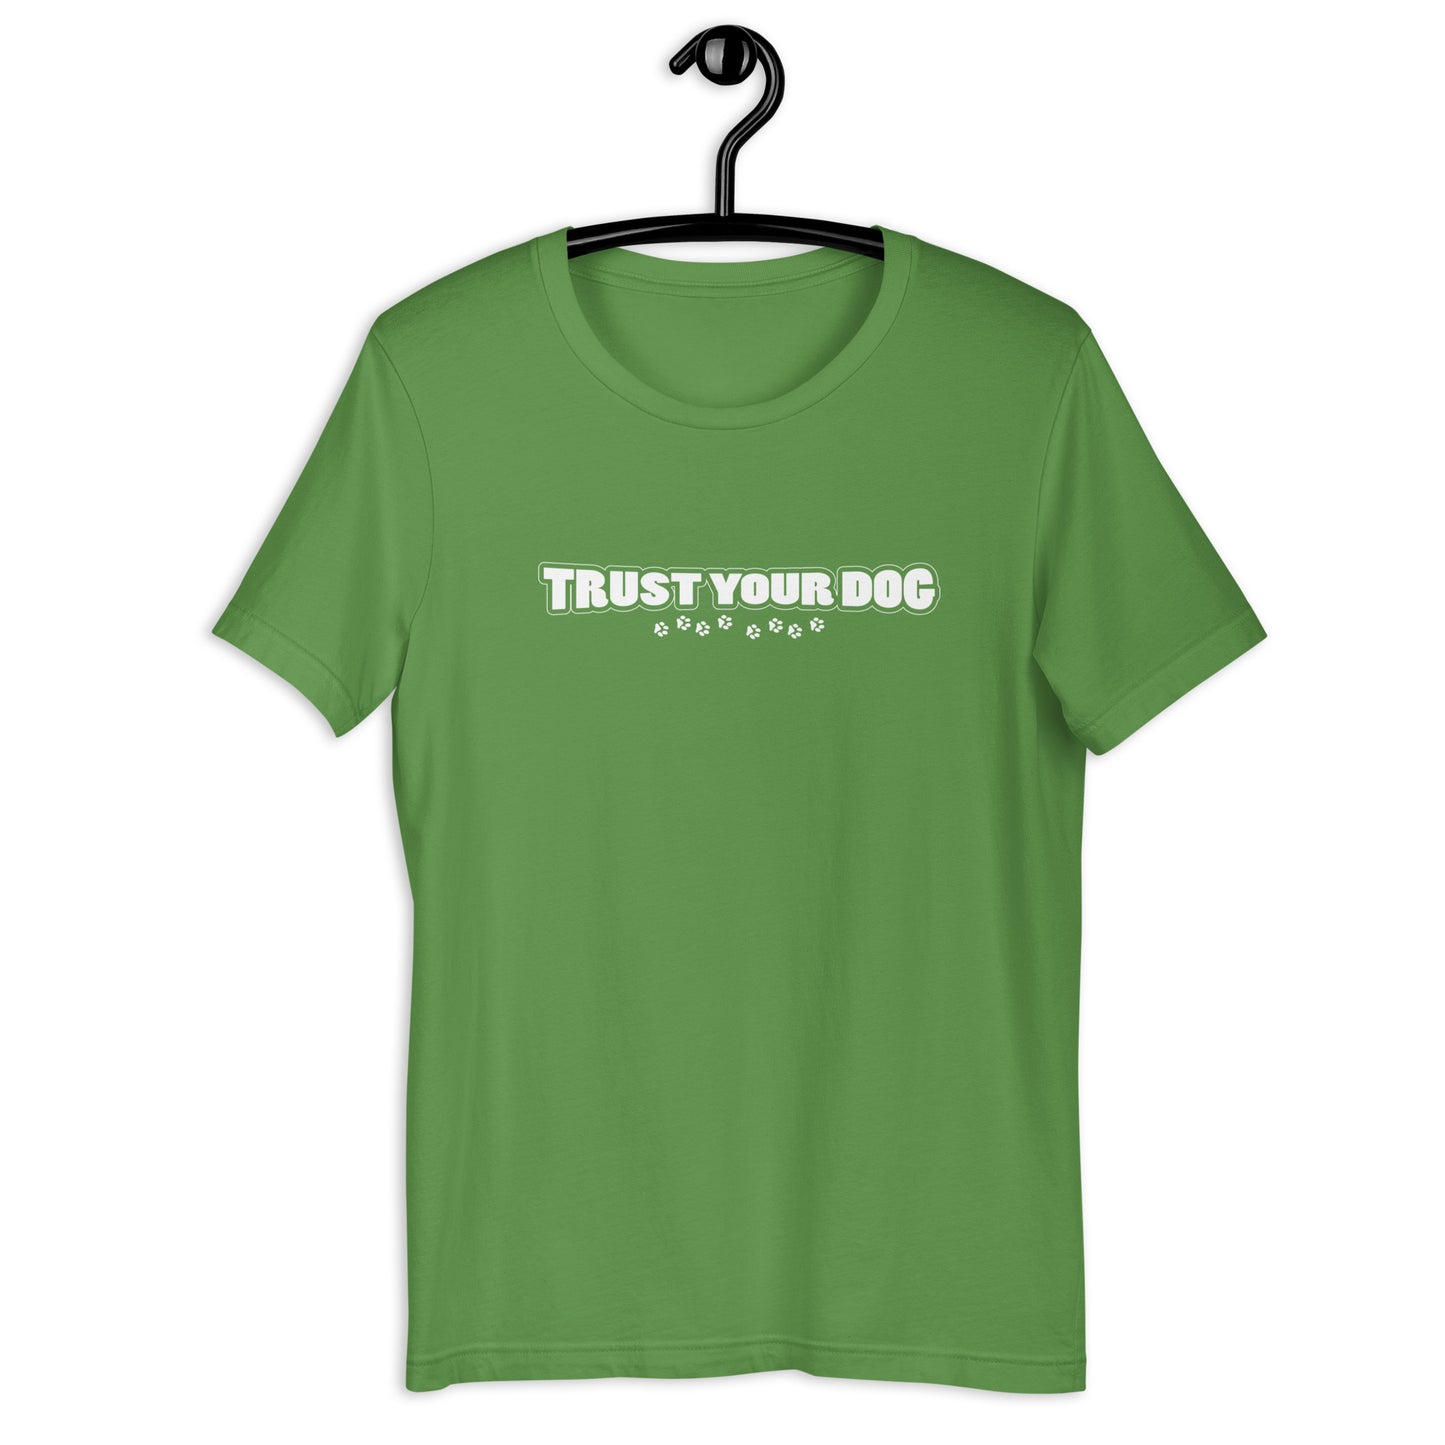 TRUST YOUR DOG - Unisex t-shirt